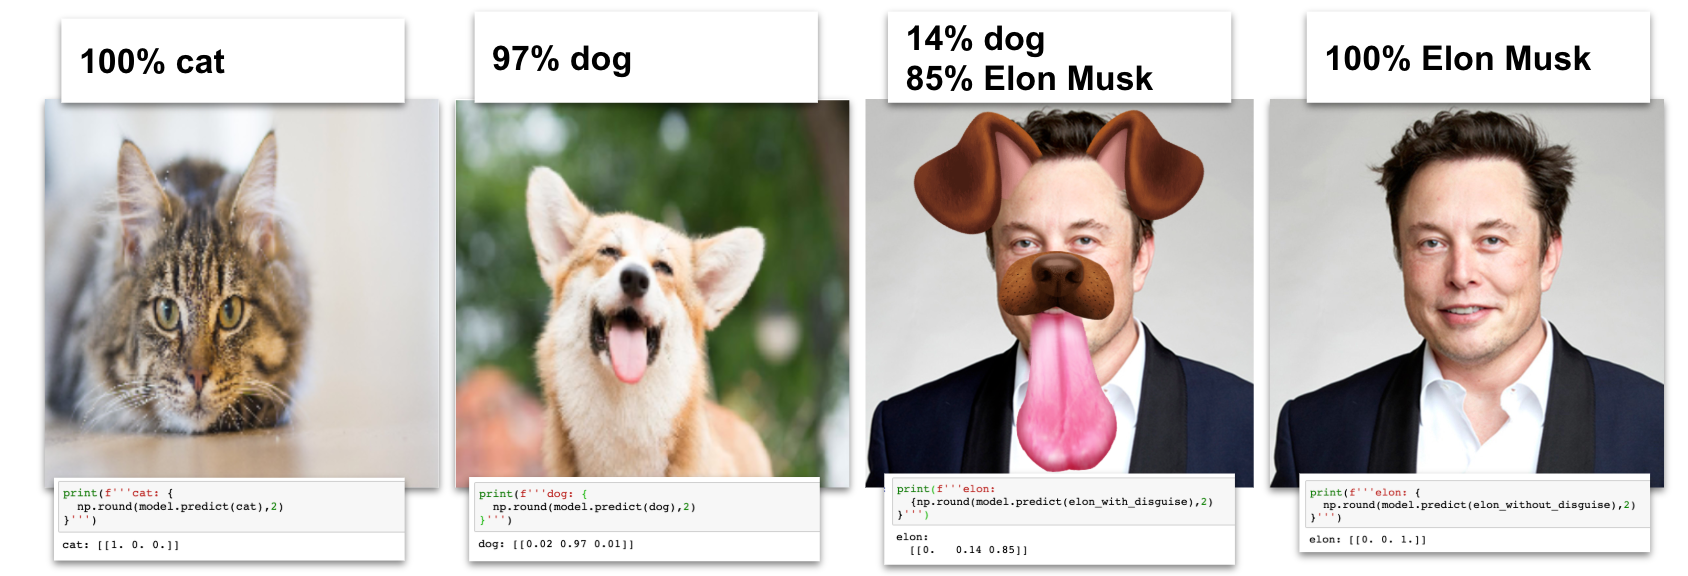 Cat, Dog, or Elon Musk? - Towards Data Science